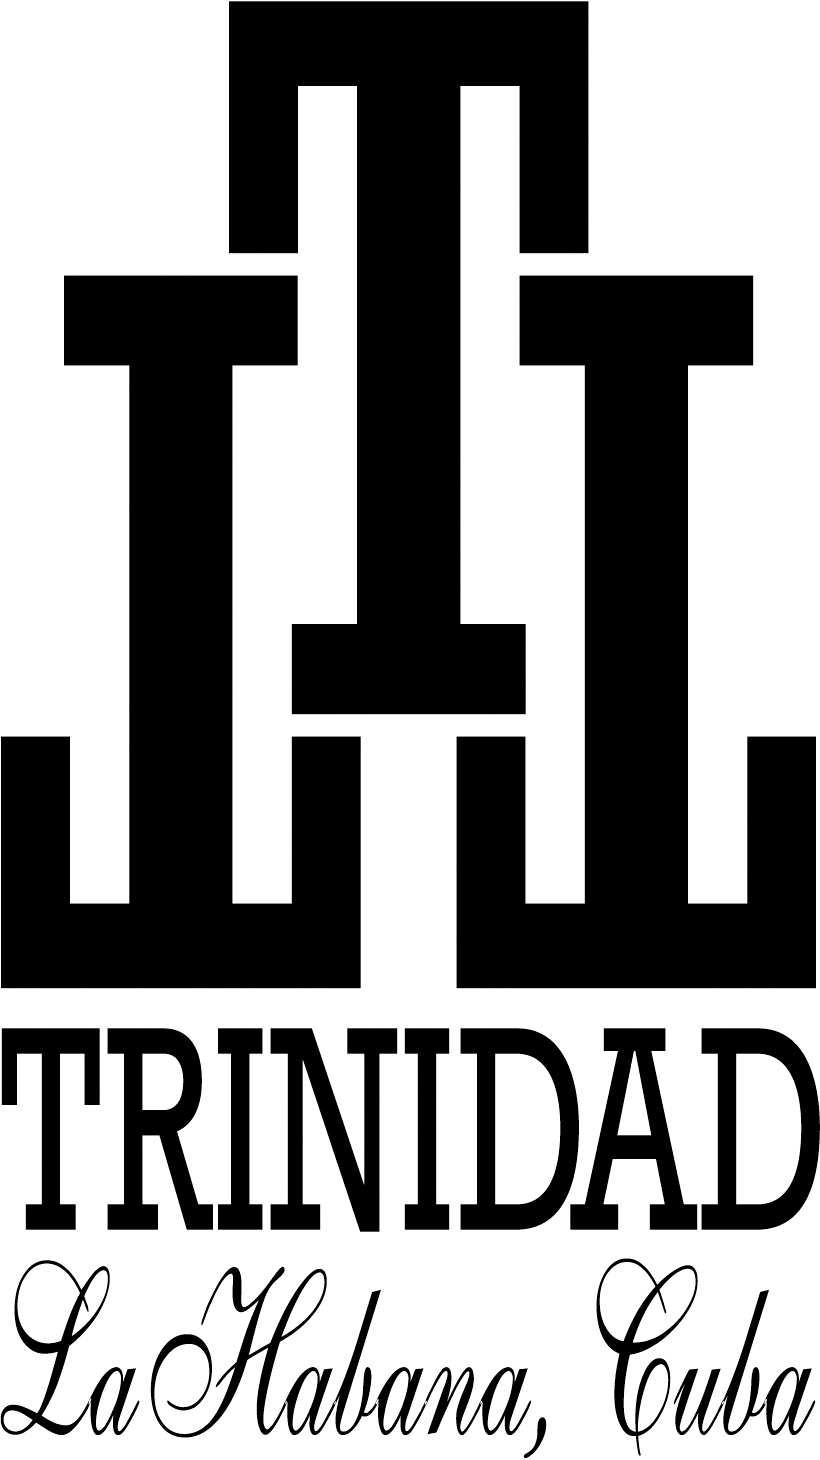 TRINIDAD Reyes 8861 / 24 110 x 15,87 mm TRINIDAD Coloniales 8859 / 24 132 x 17,46 mm